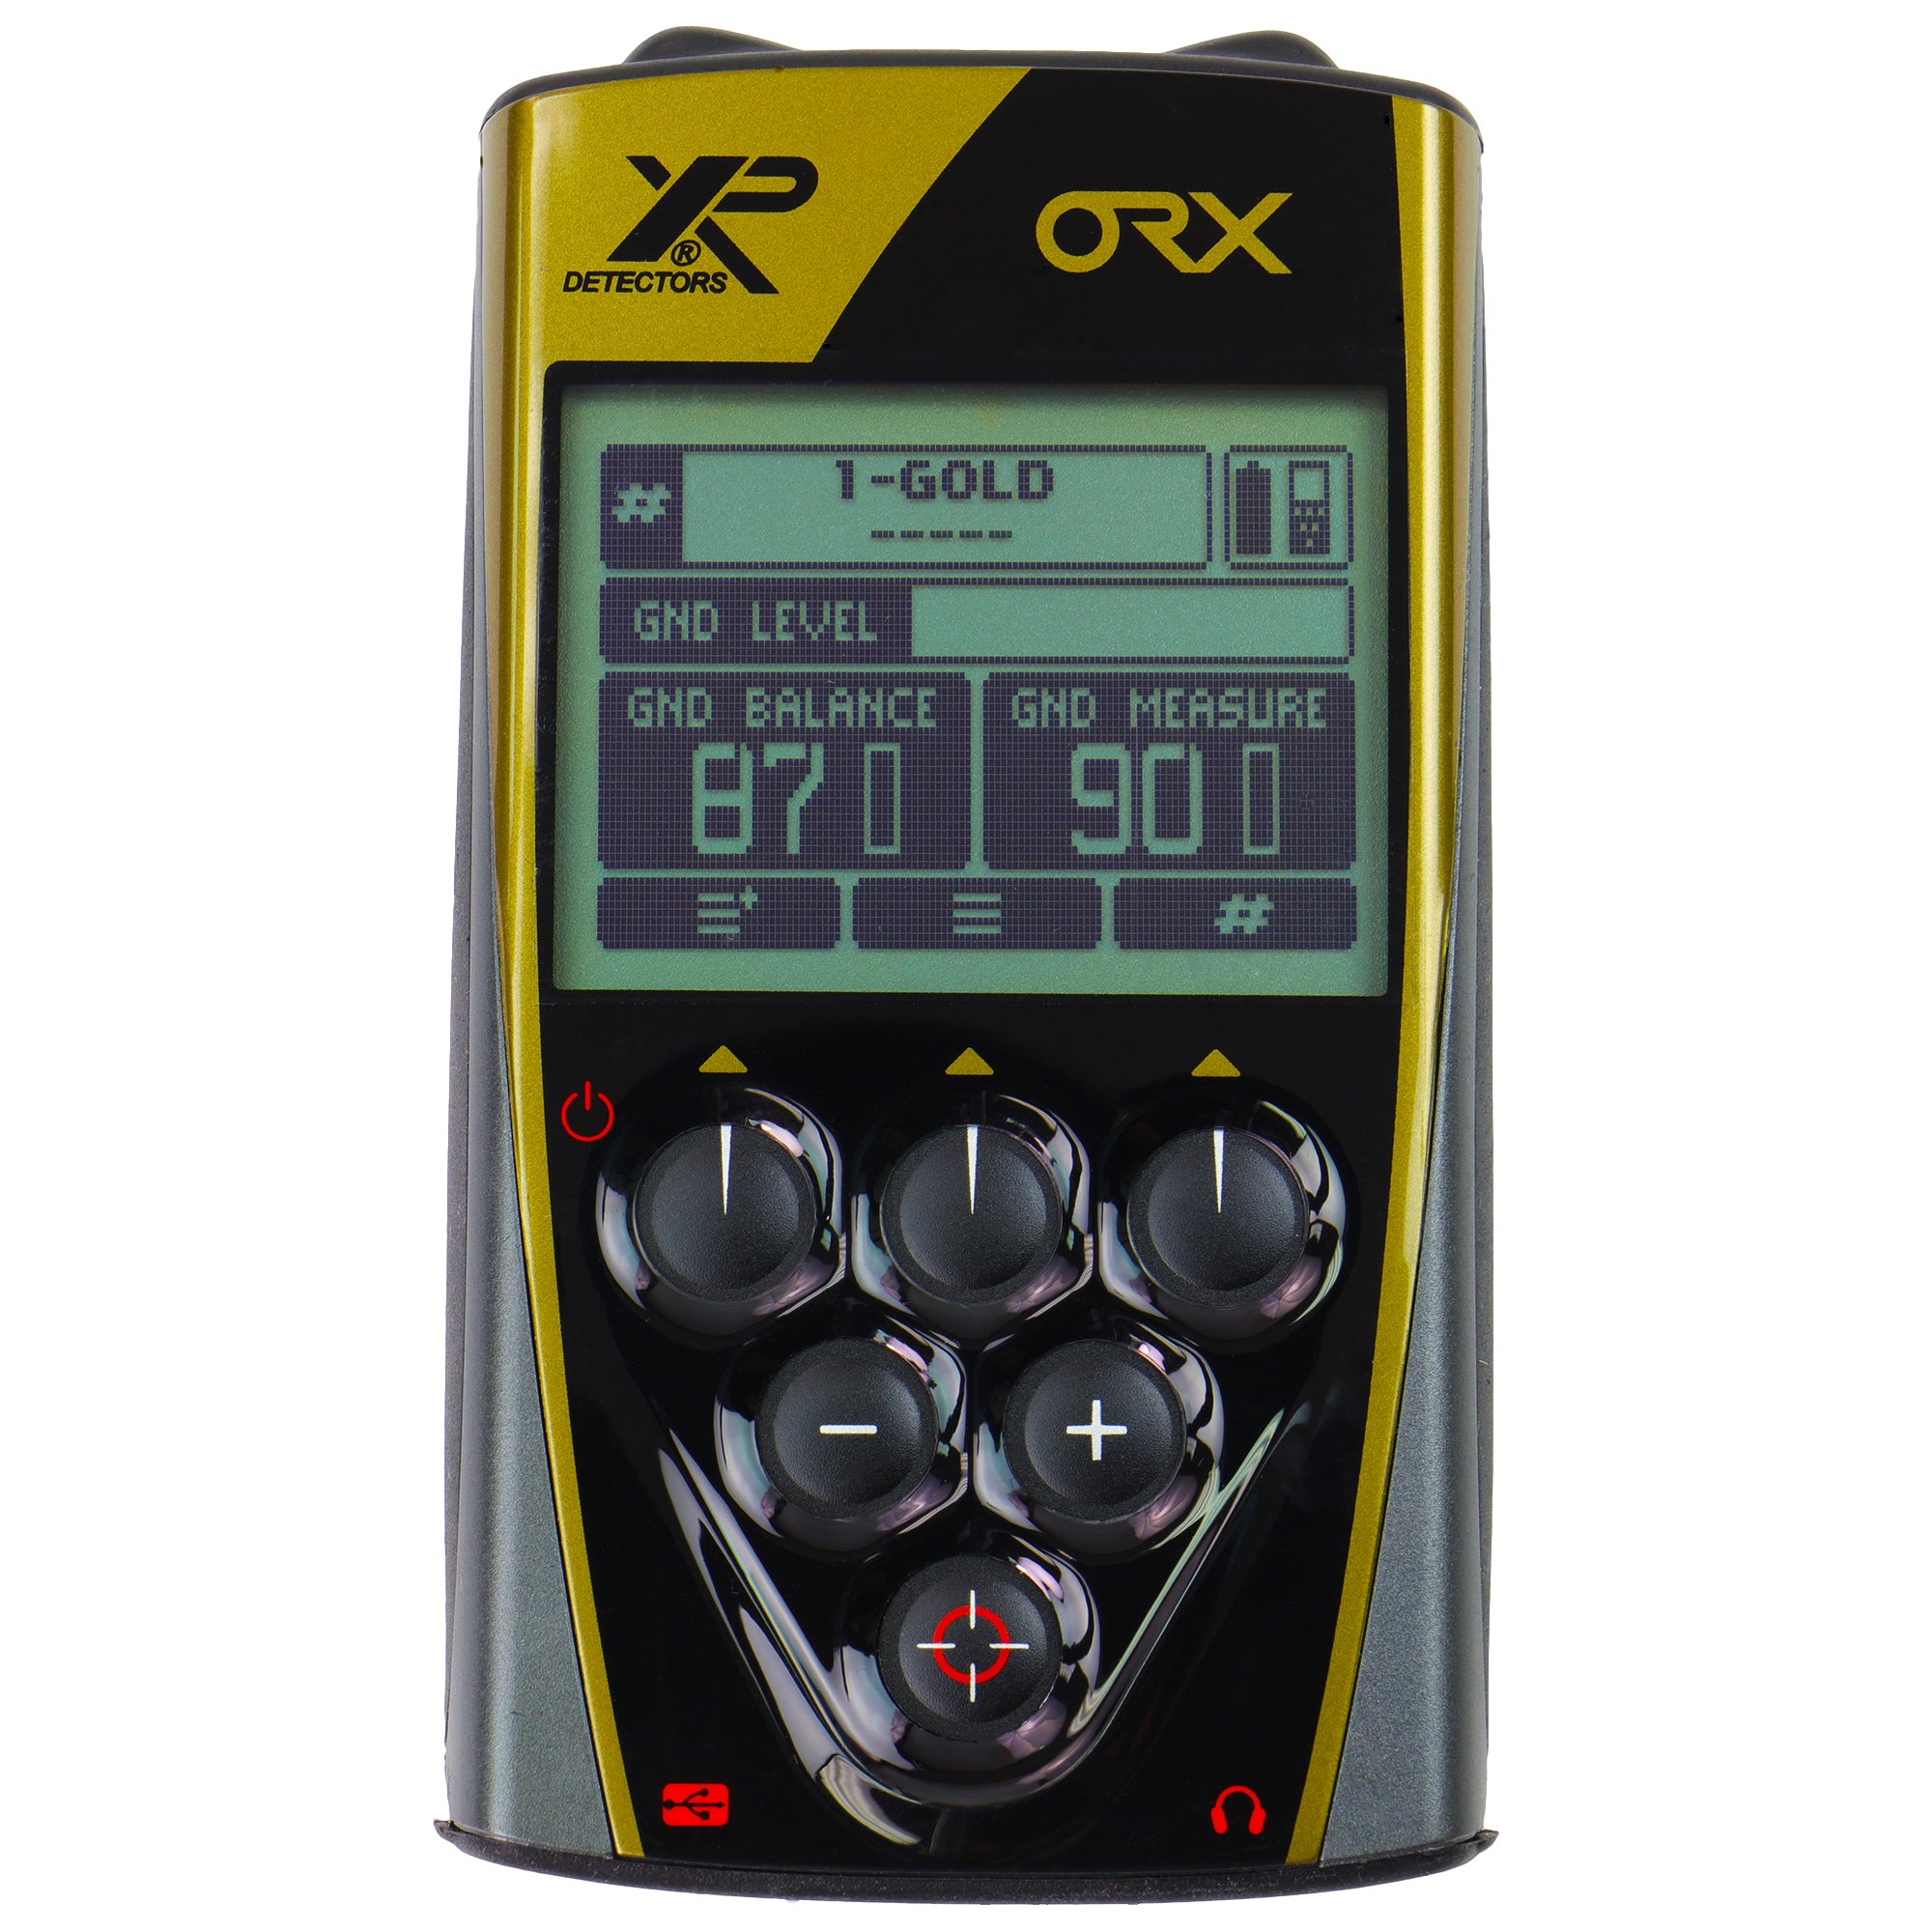 xp orx detector